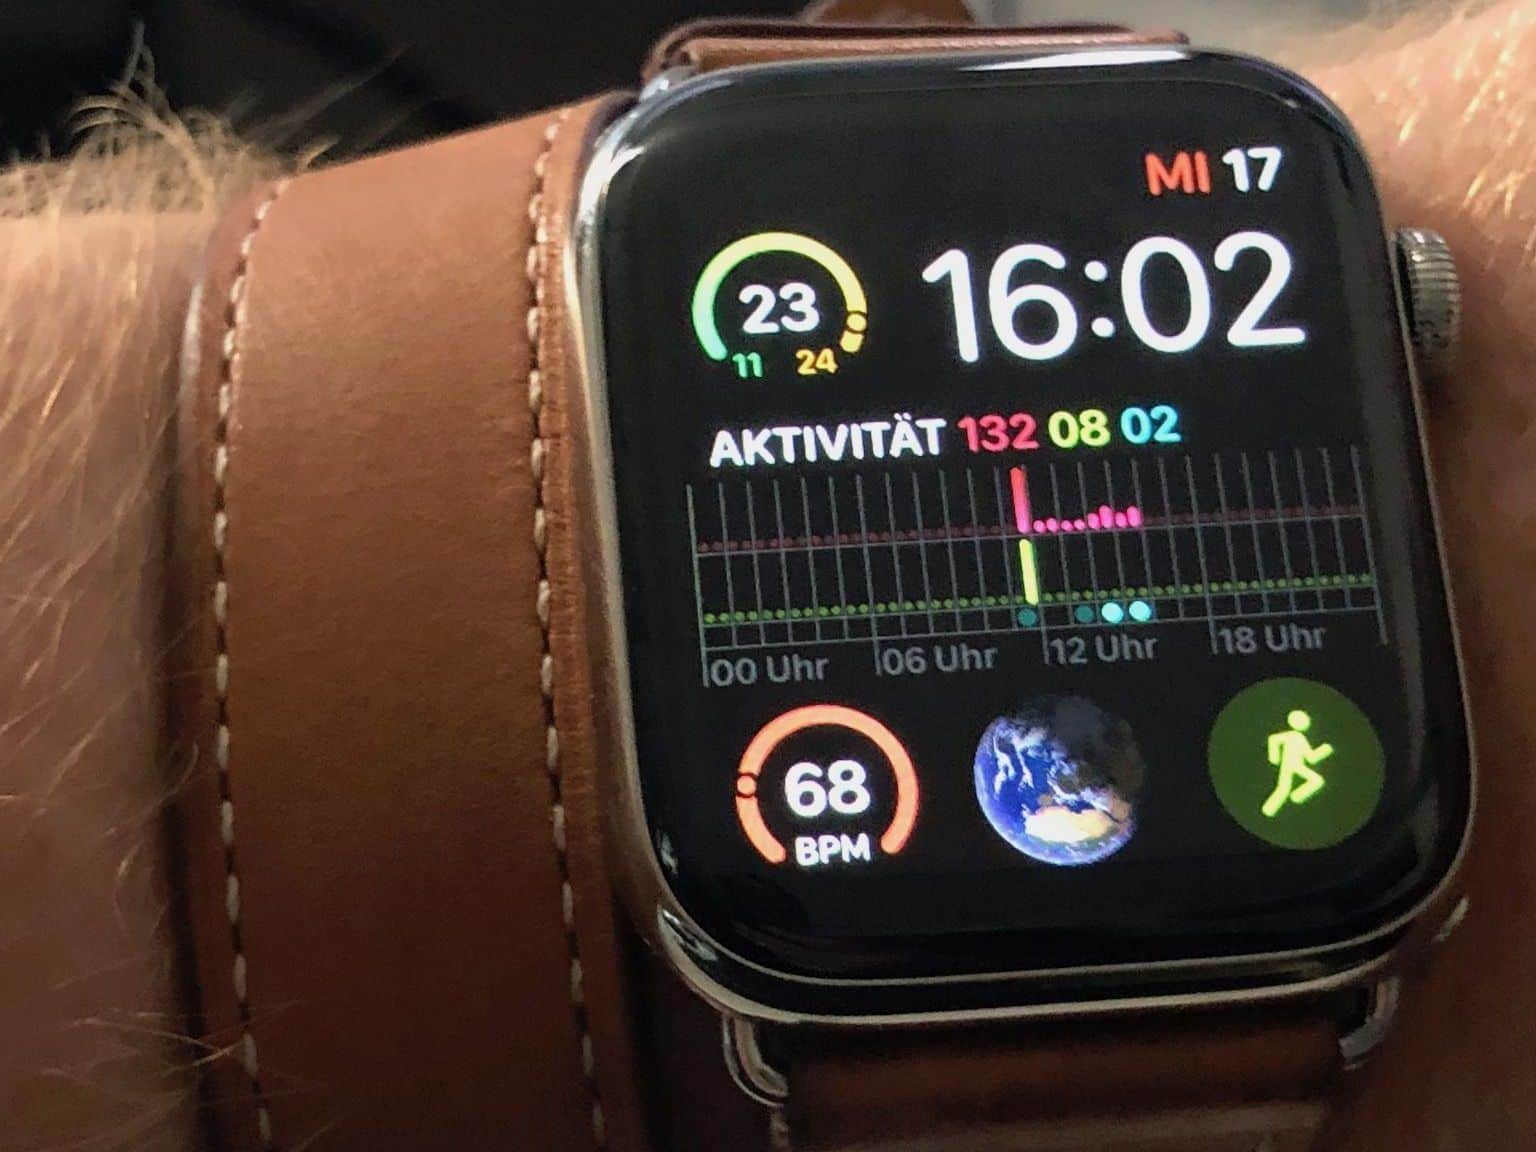 We have the Apple Watch Thoroughly tested. Photo: Sascha Tegtmeyer